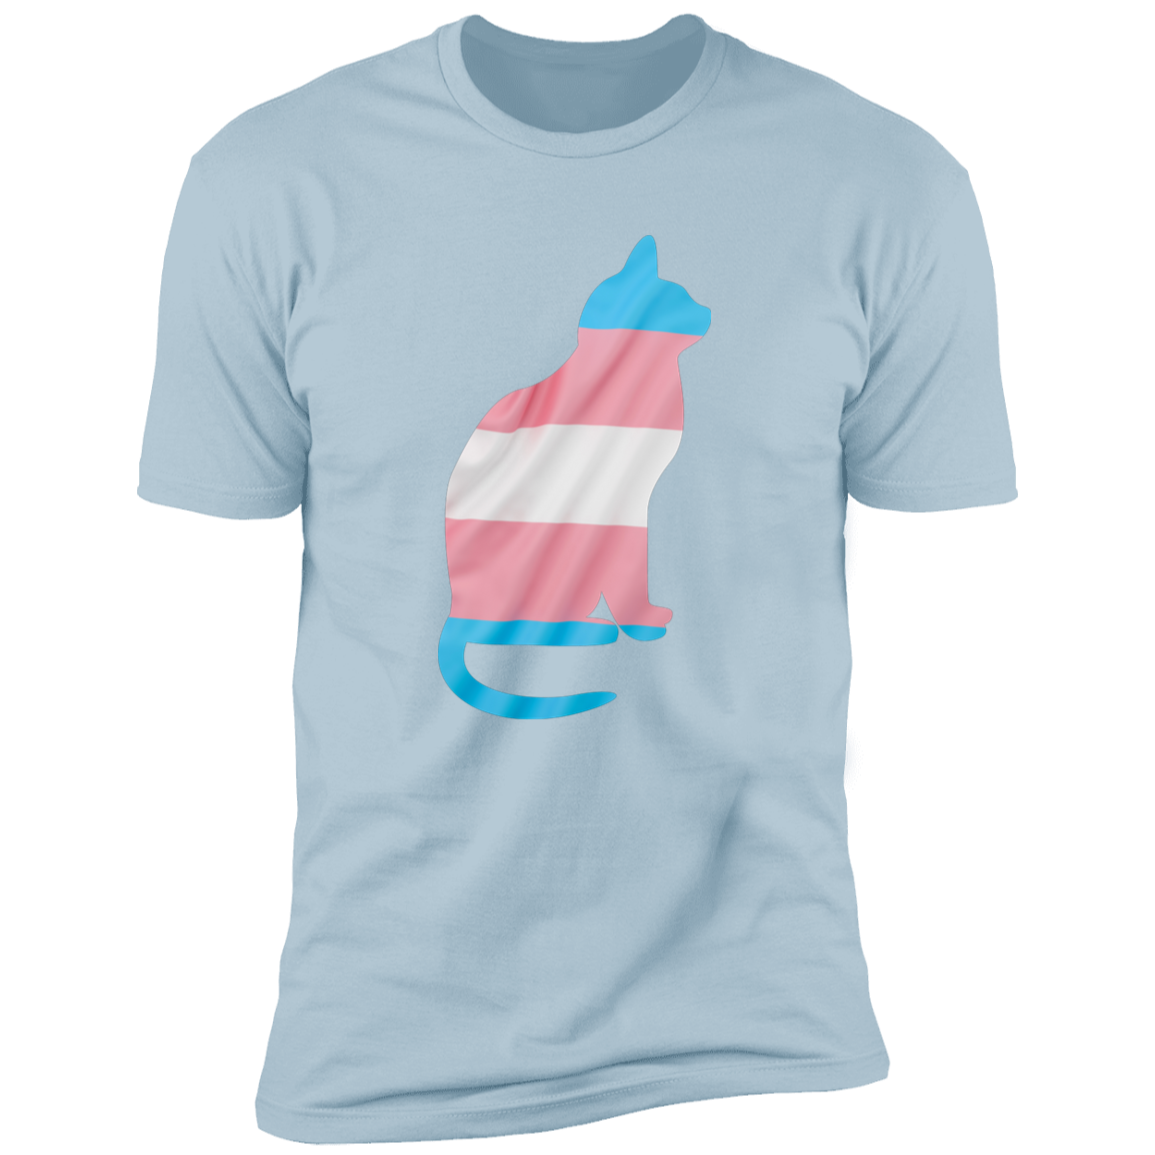 Trans Pride Cat Pride T-shirt, Trans Pride Cat Shirt for humans, in light Blue